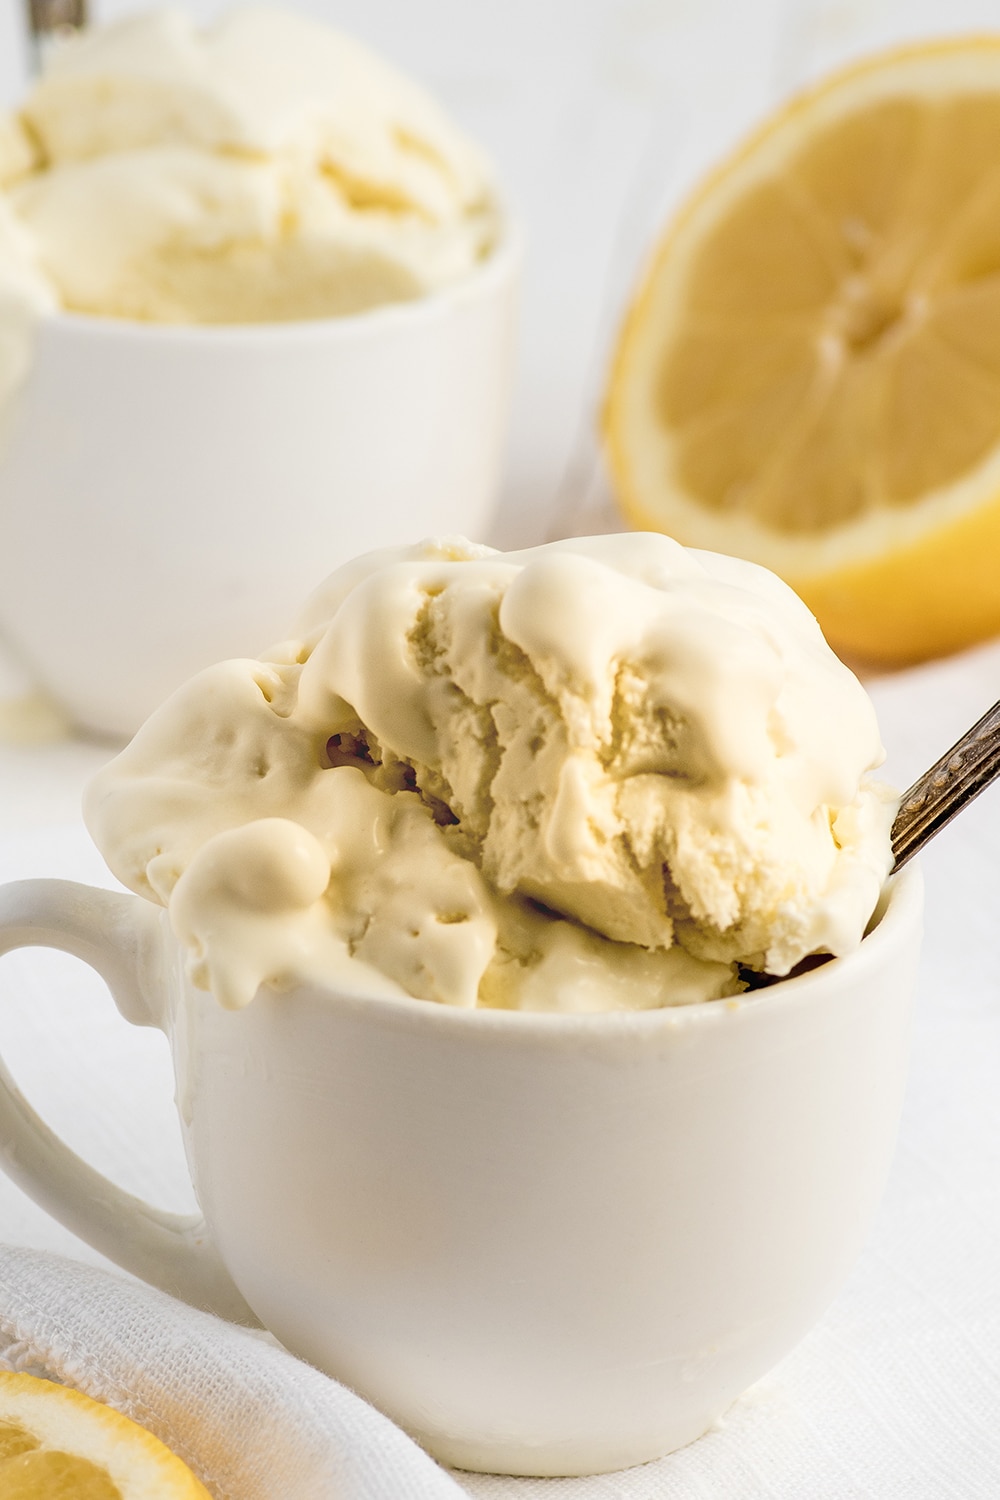 A small cup of creamy lemon gelato melting